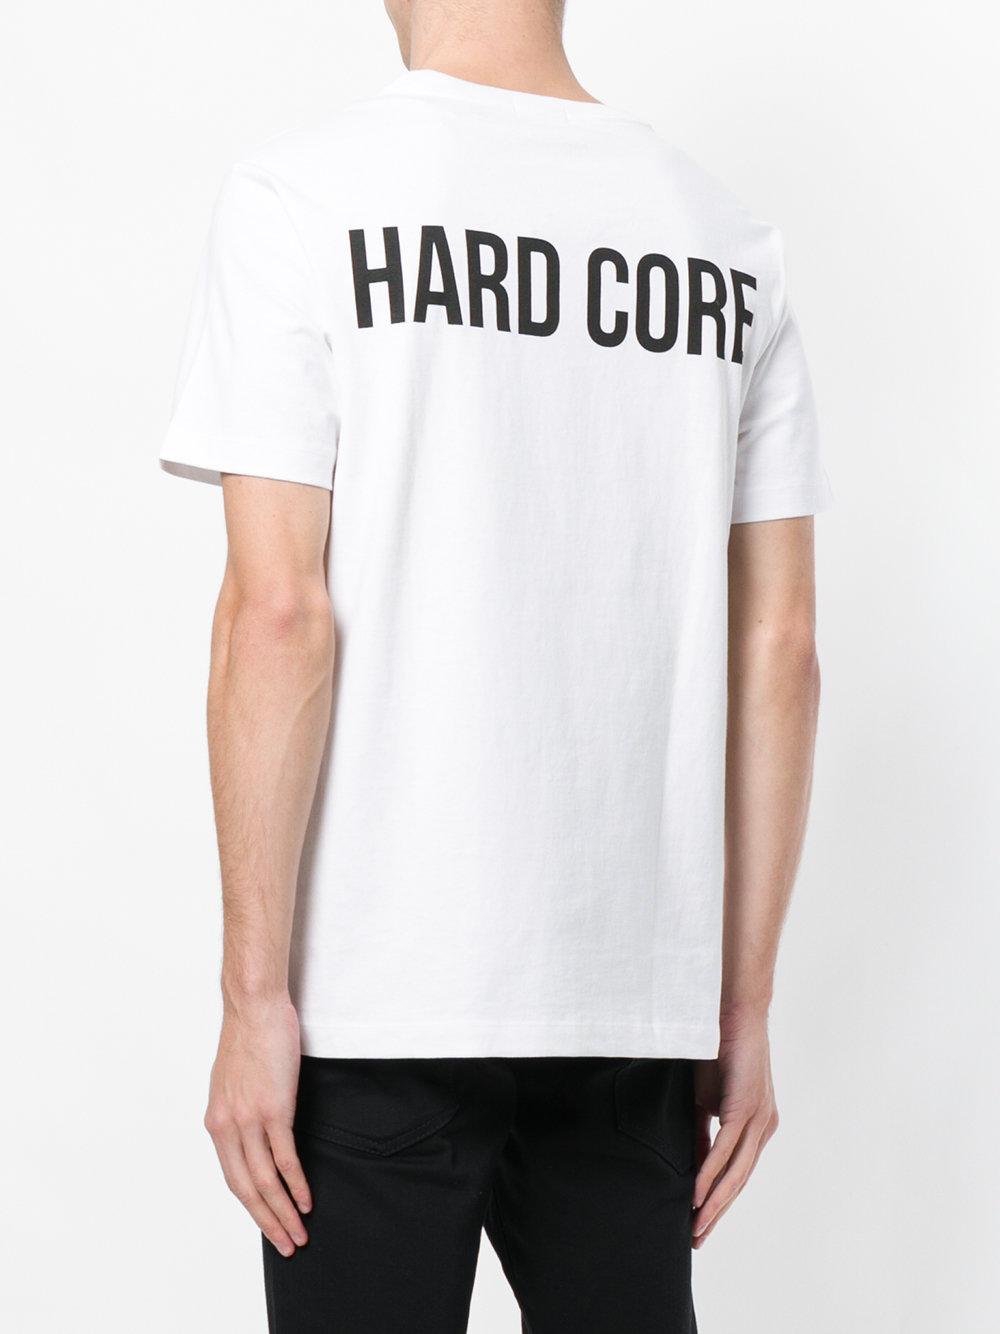 Calvin Klein Cotton Hardcore Logo T-shirt in White for Men - Lyst